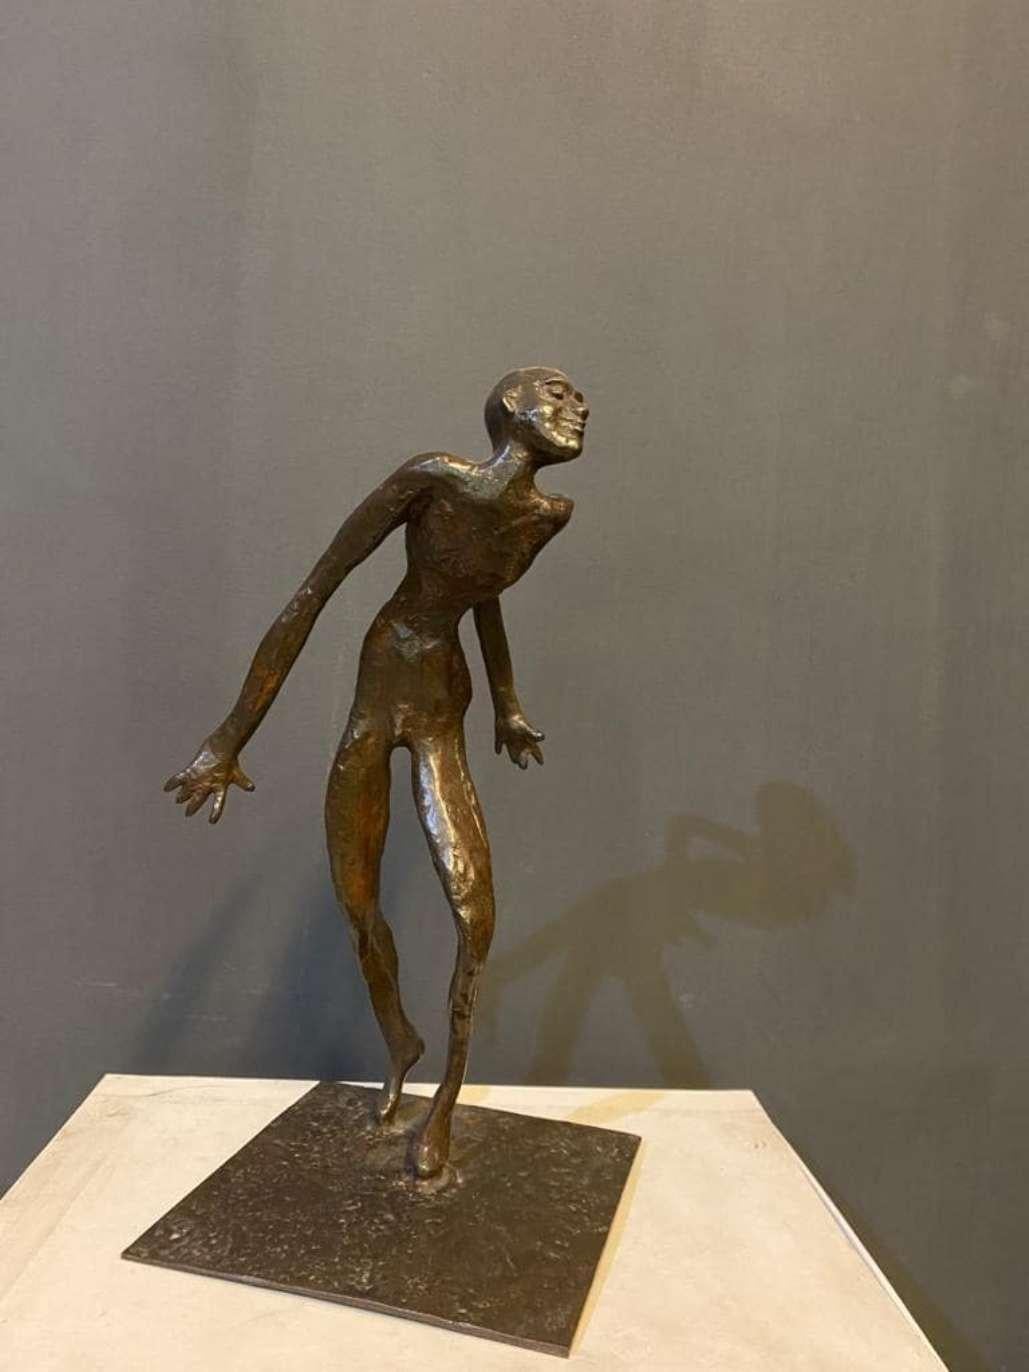 Ramp Figure, Bronze Sculpture, Black color by Modern Indian Artist "In Stock"